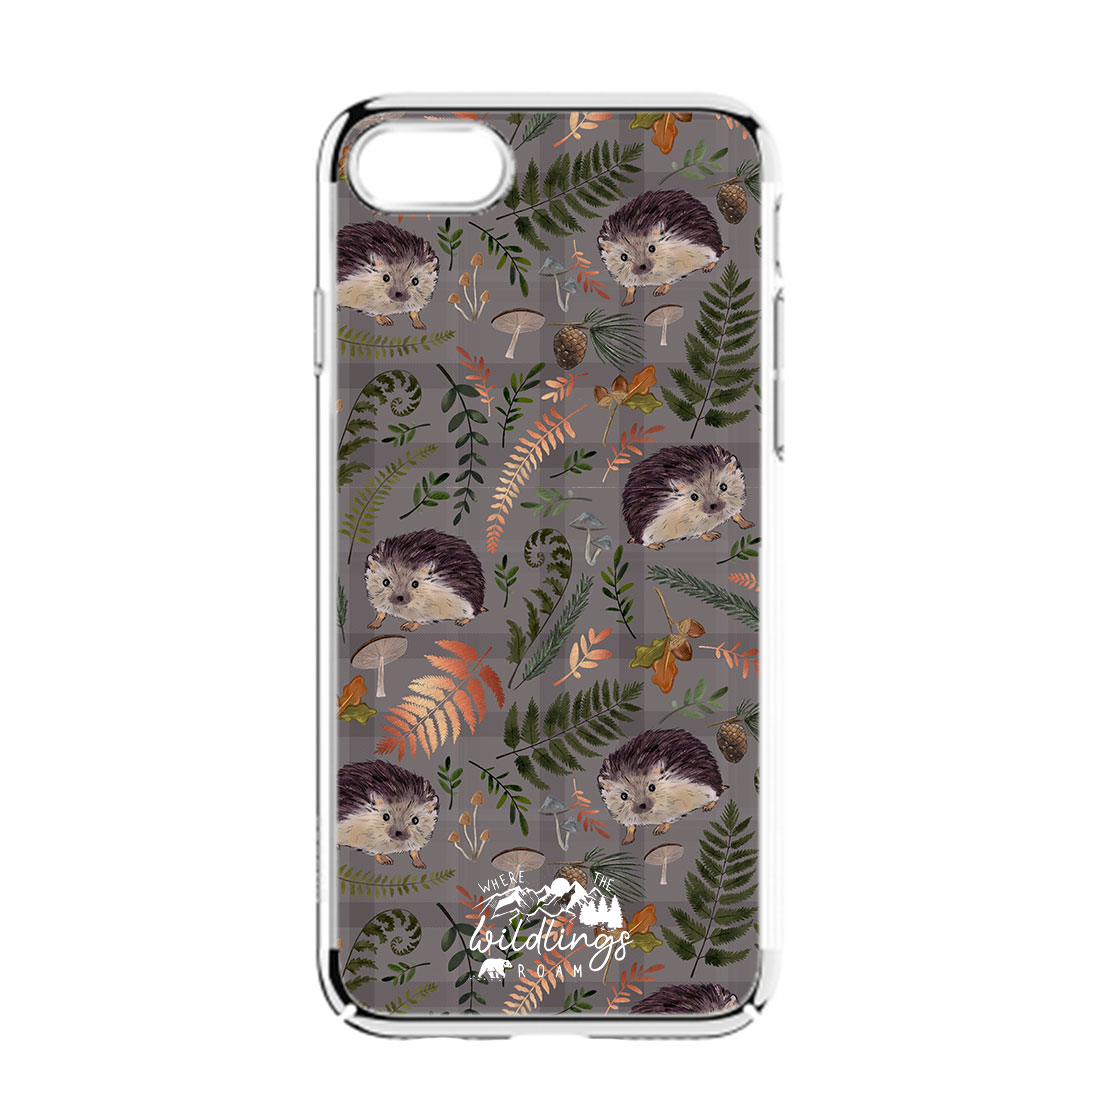 hedgehog-pack-iphone-case